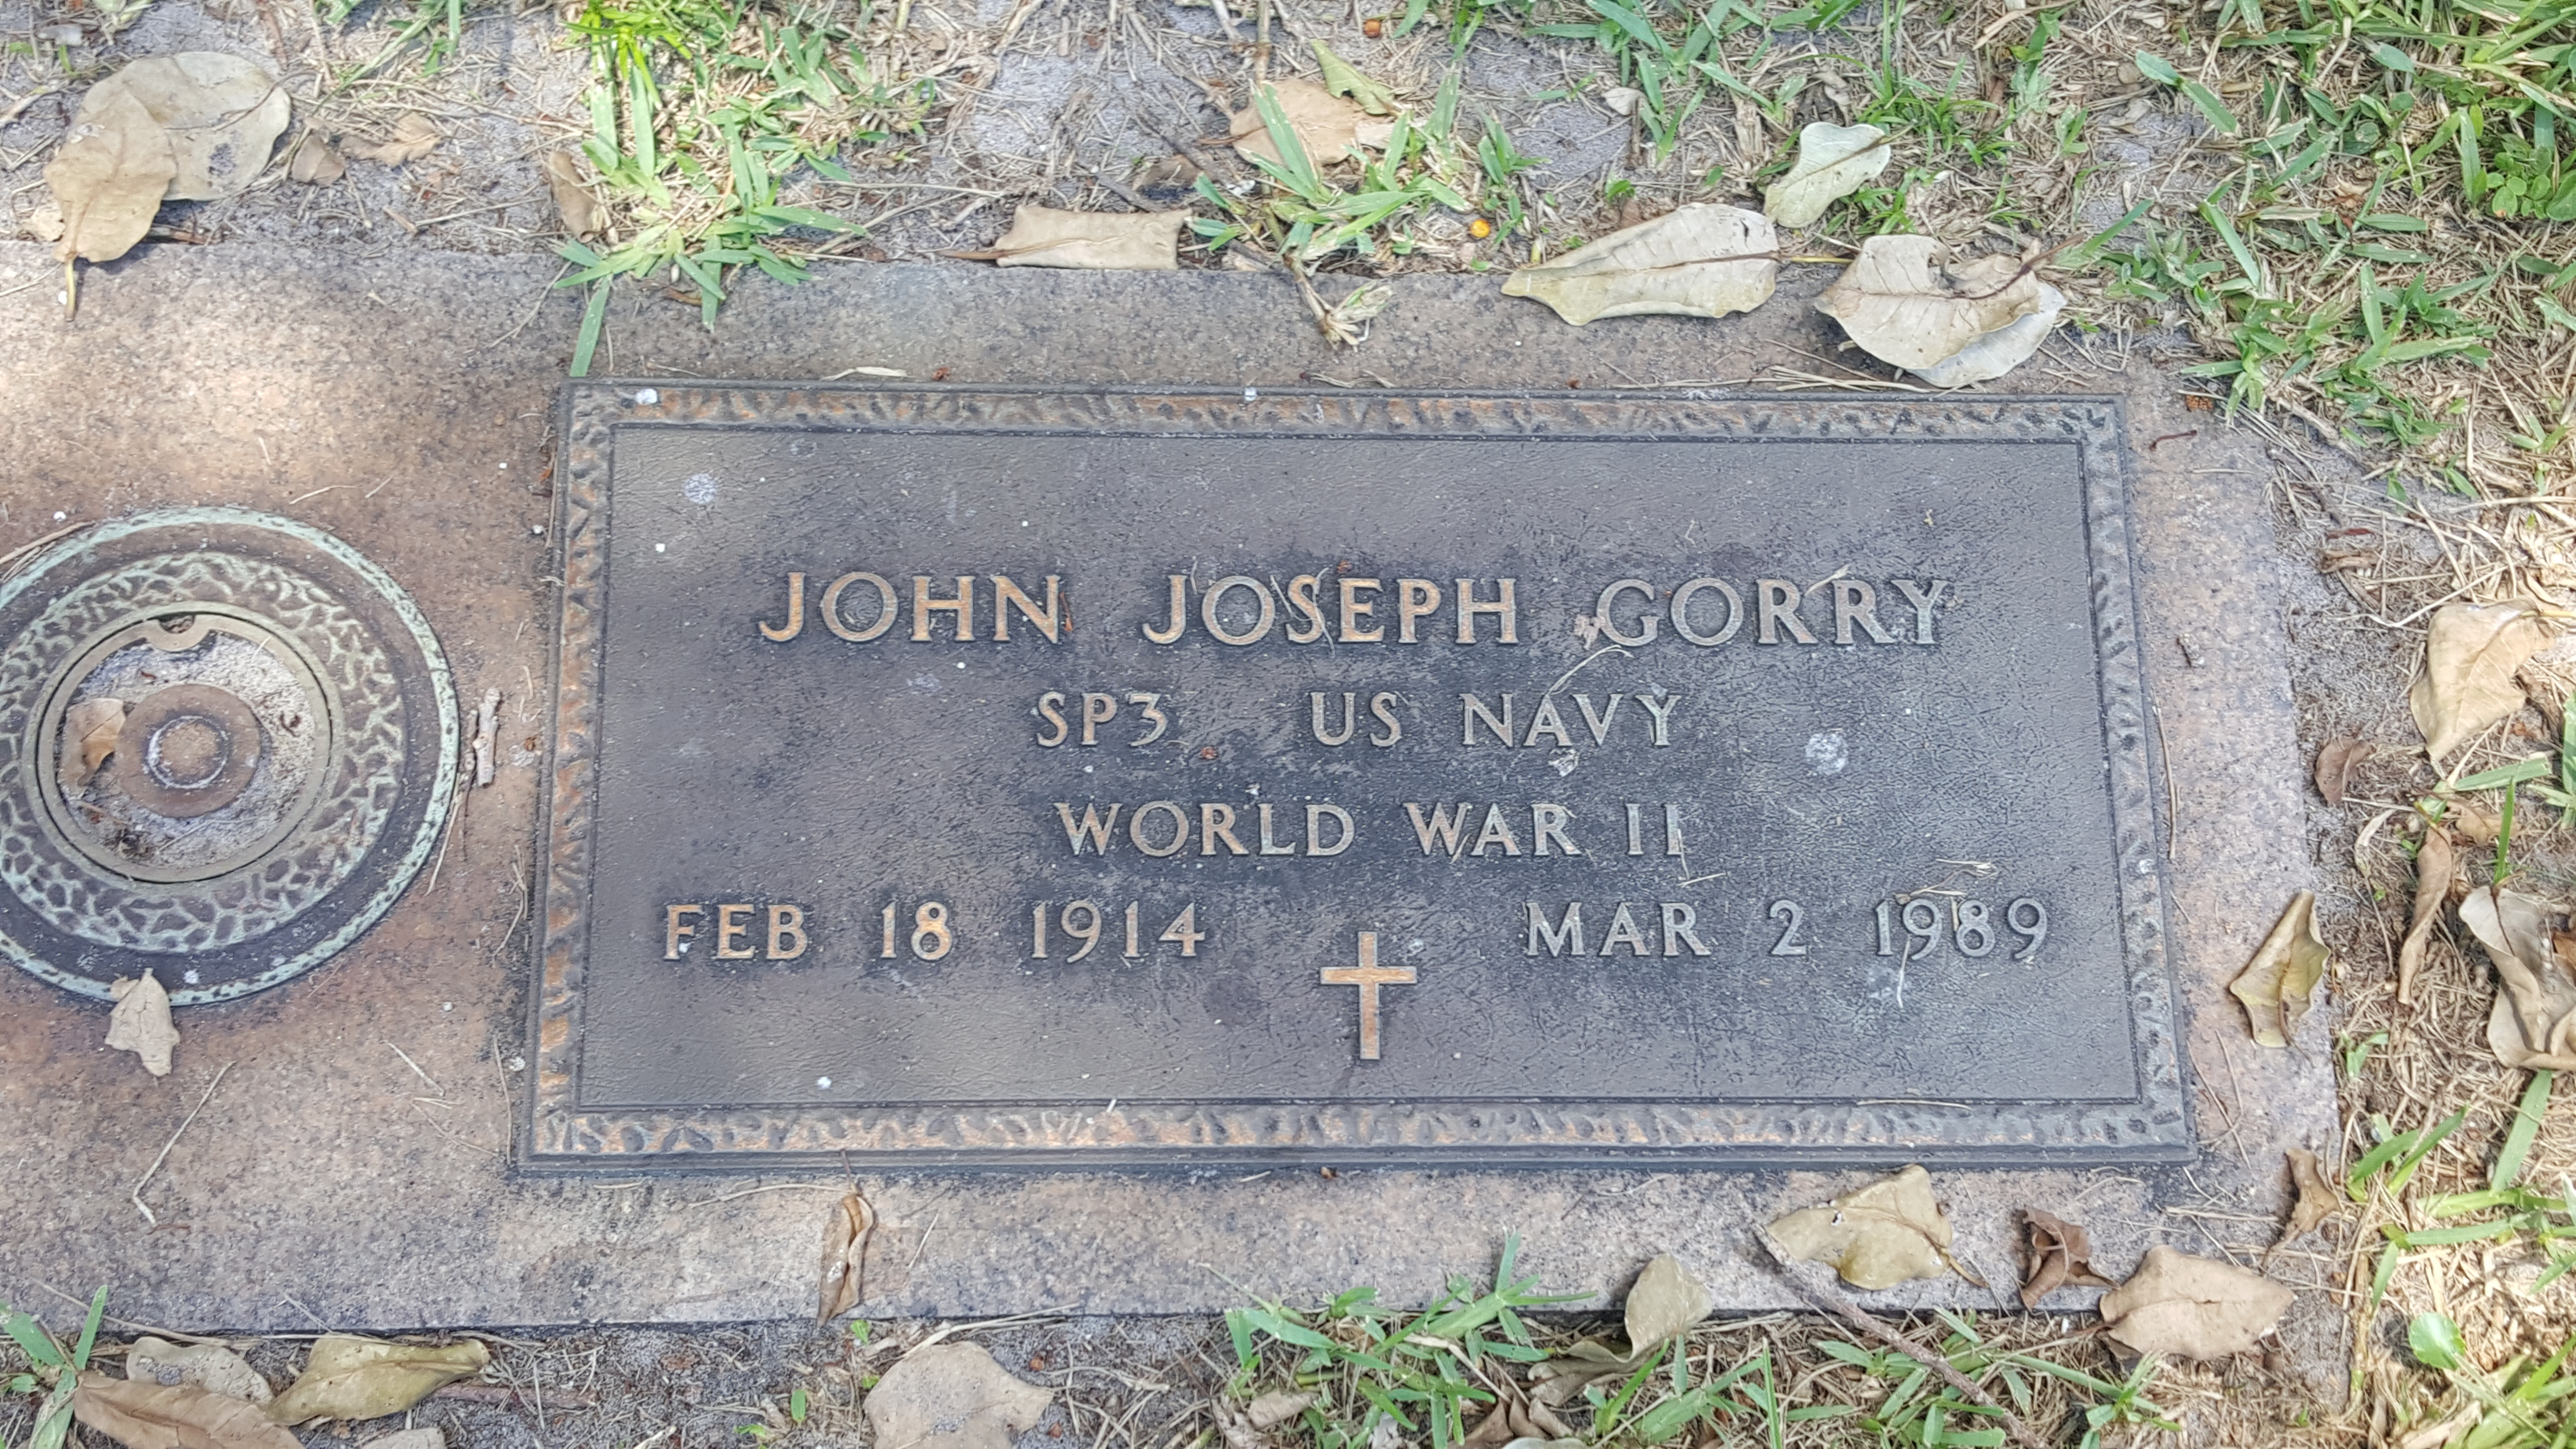 John Joseph Gorry